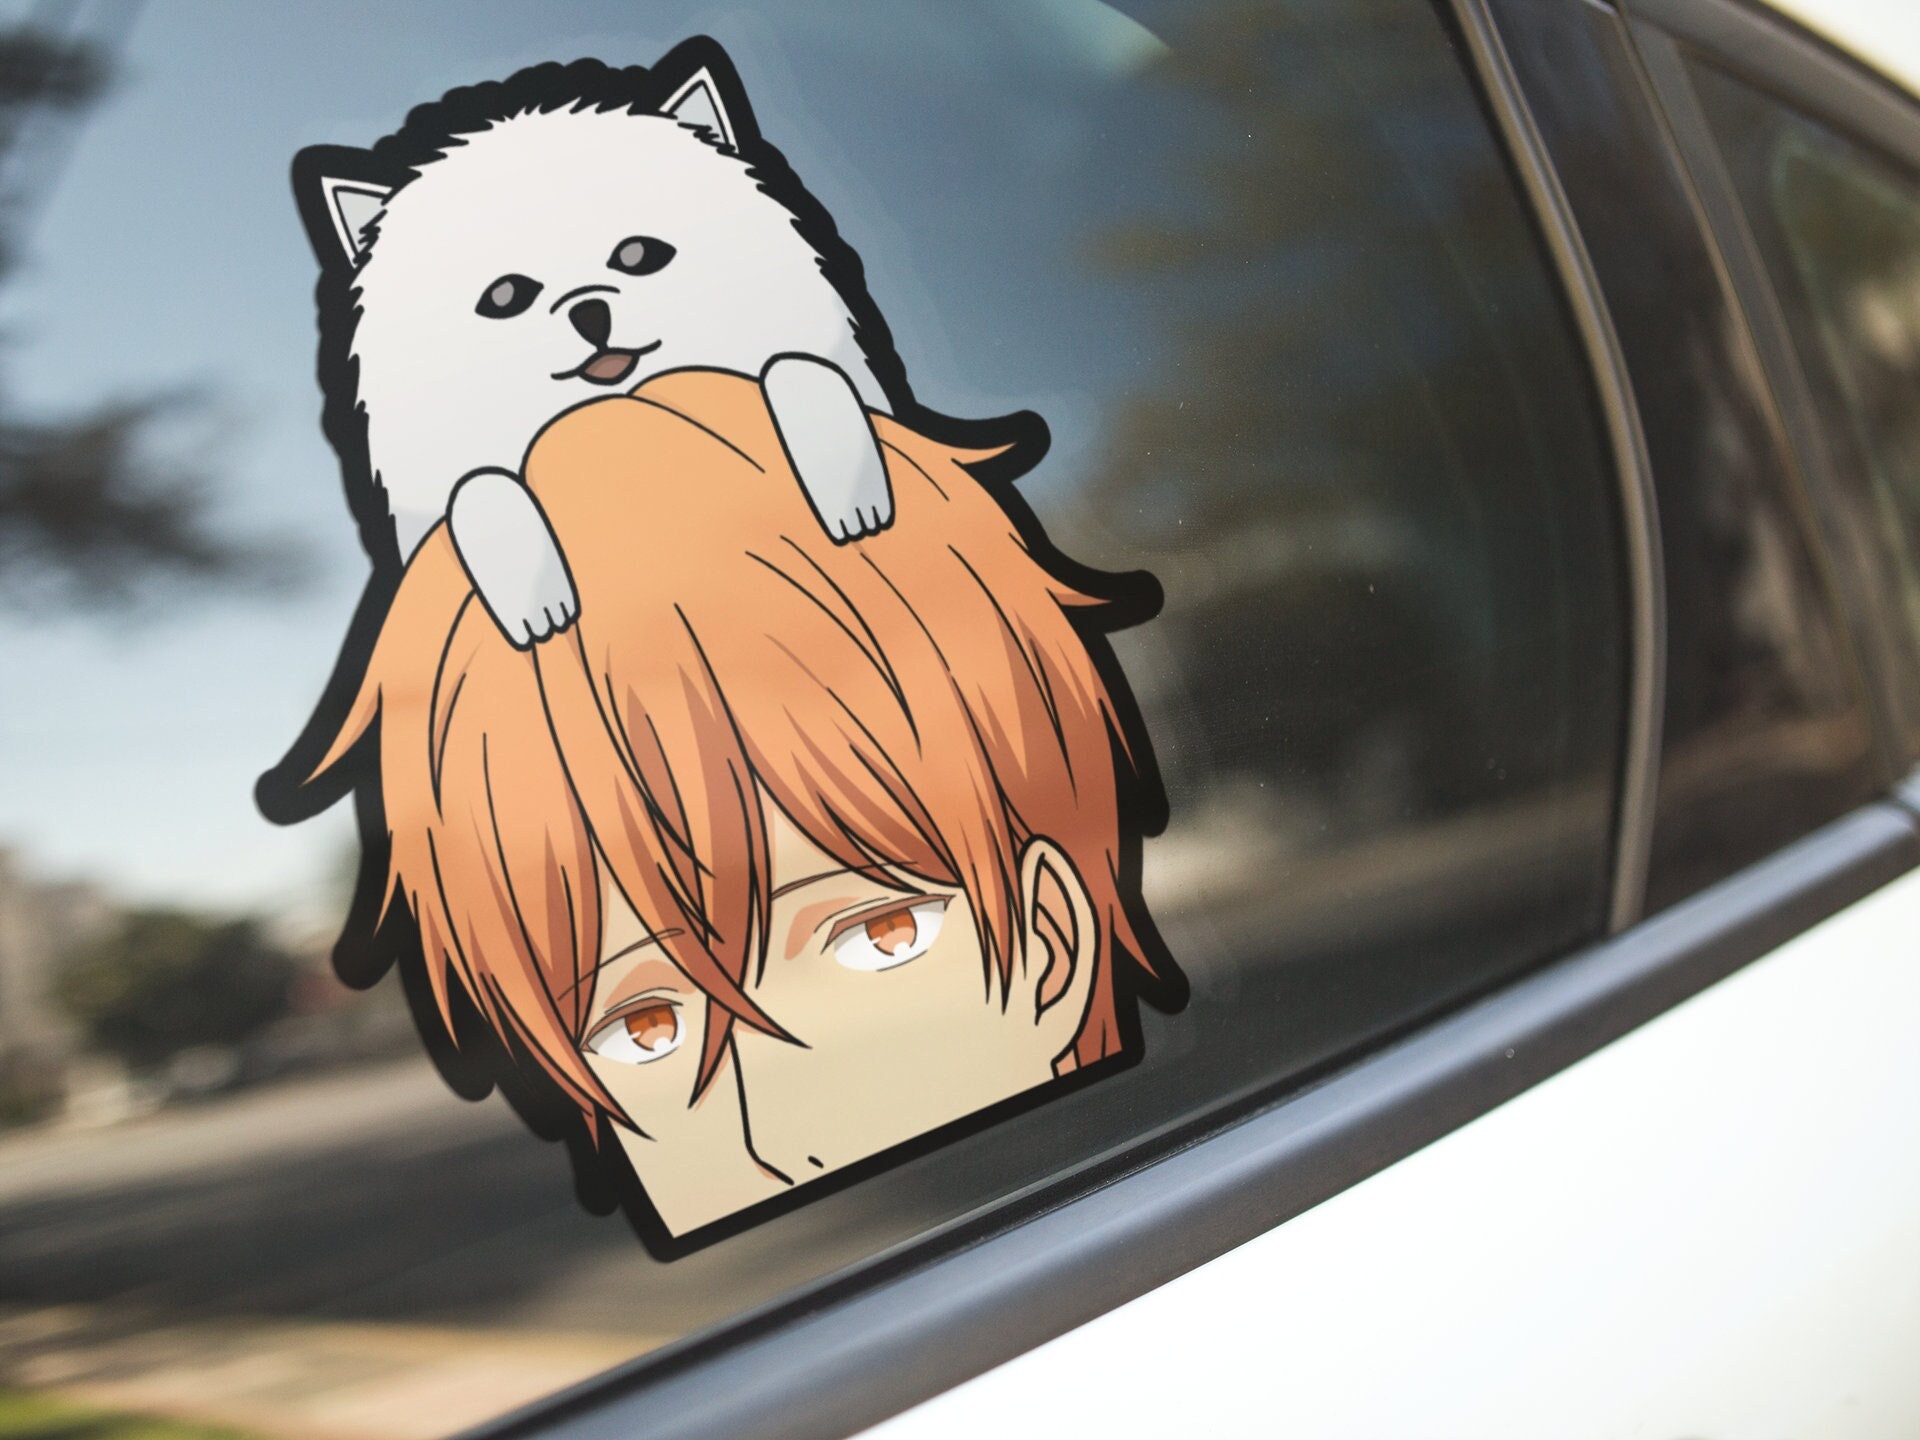 STRDL08 Boruto karma Naruto Peeking anime sticker Car Decal Window   animestickershop